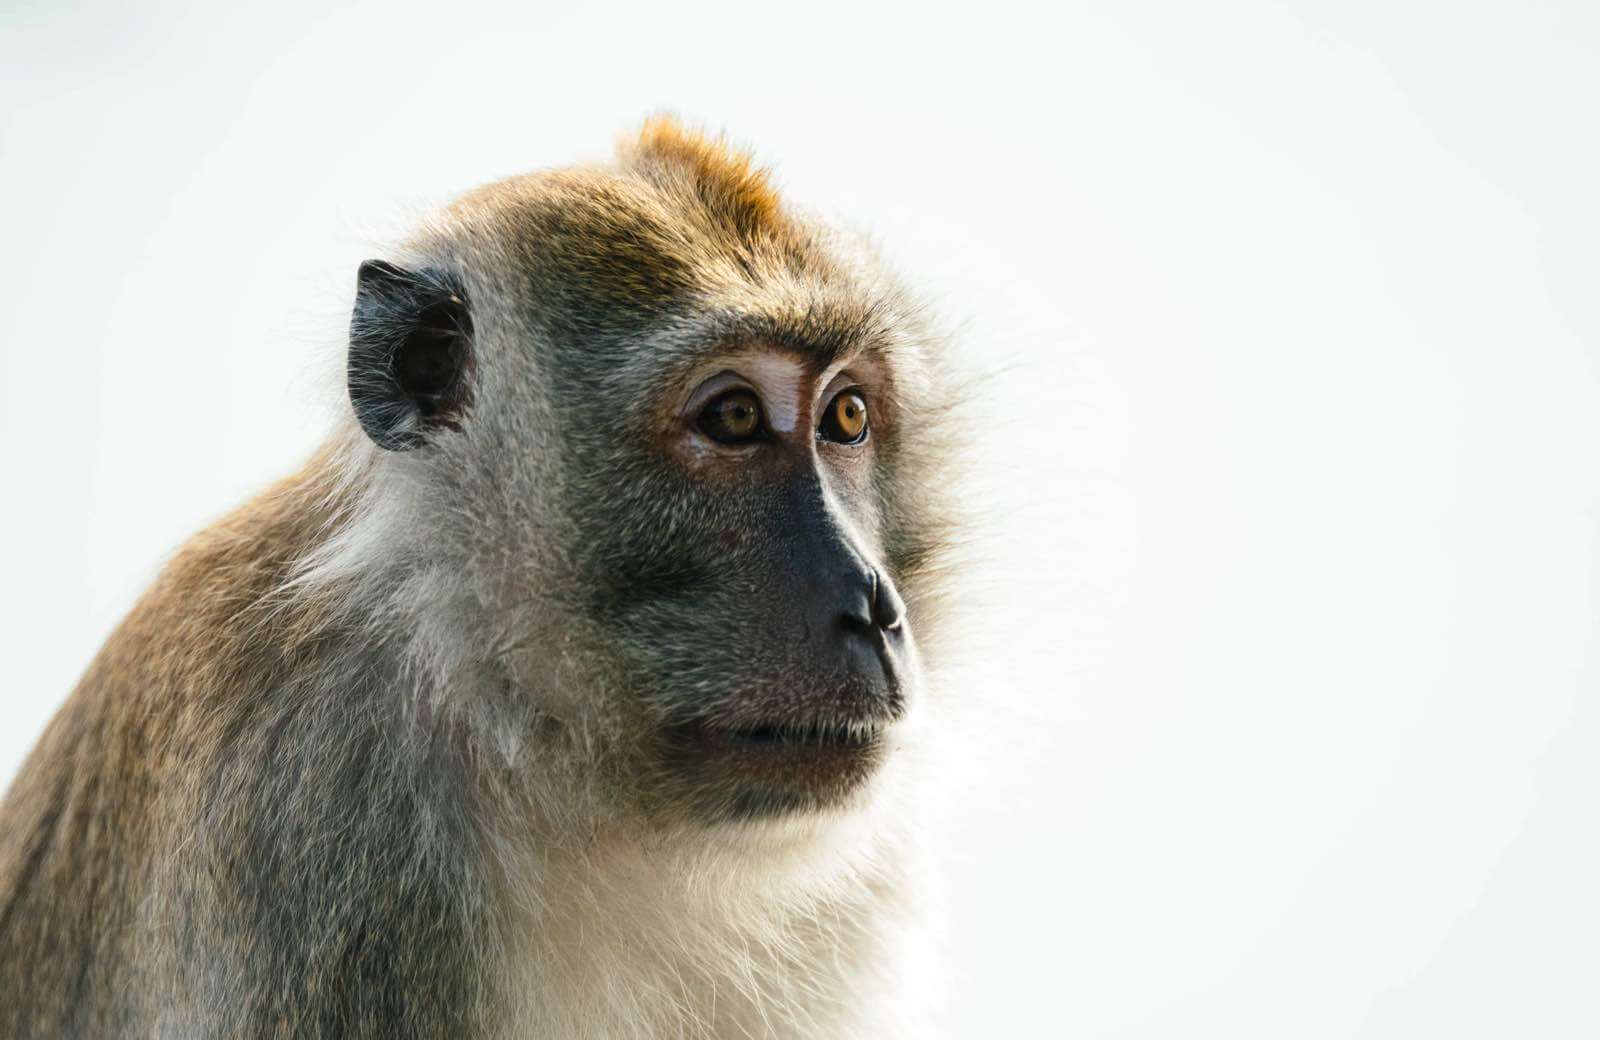 A curious Balinese monkey